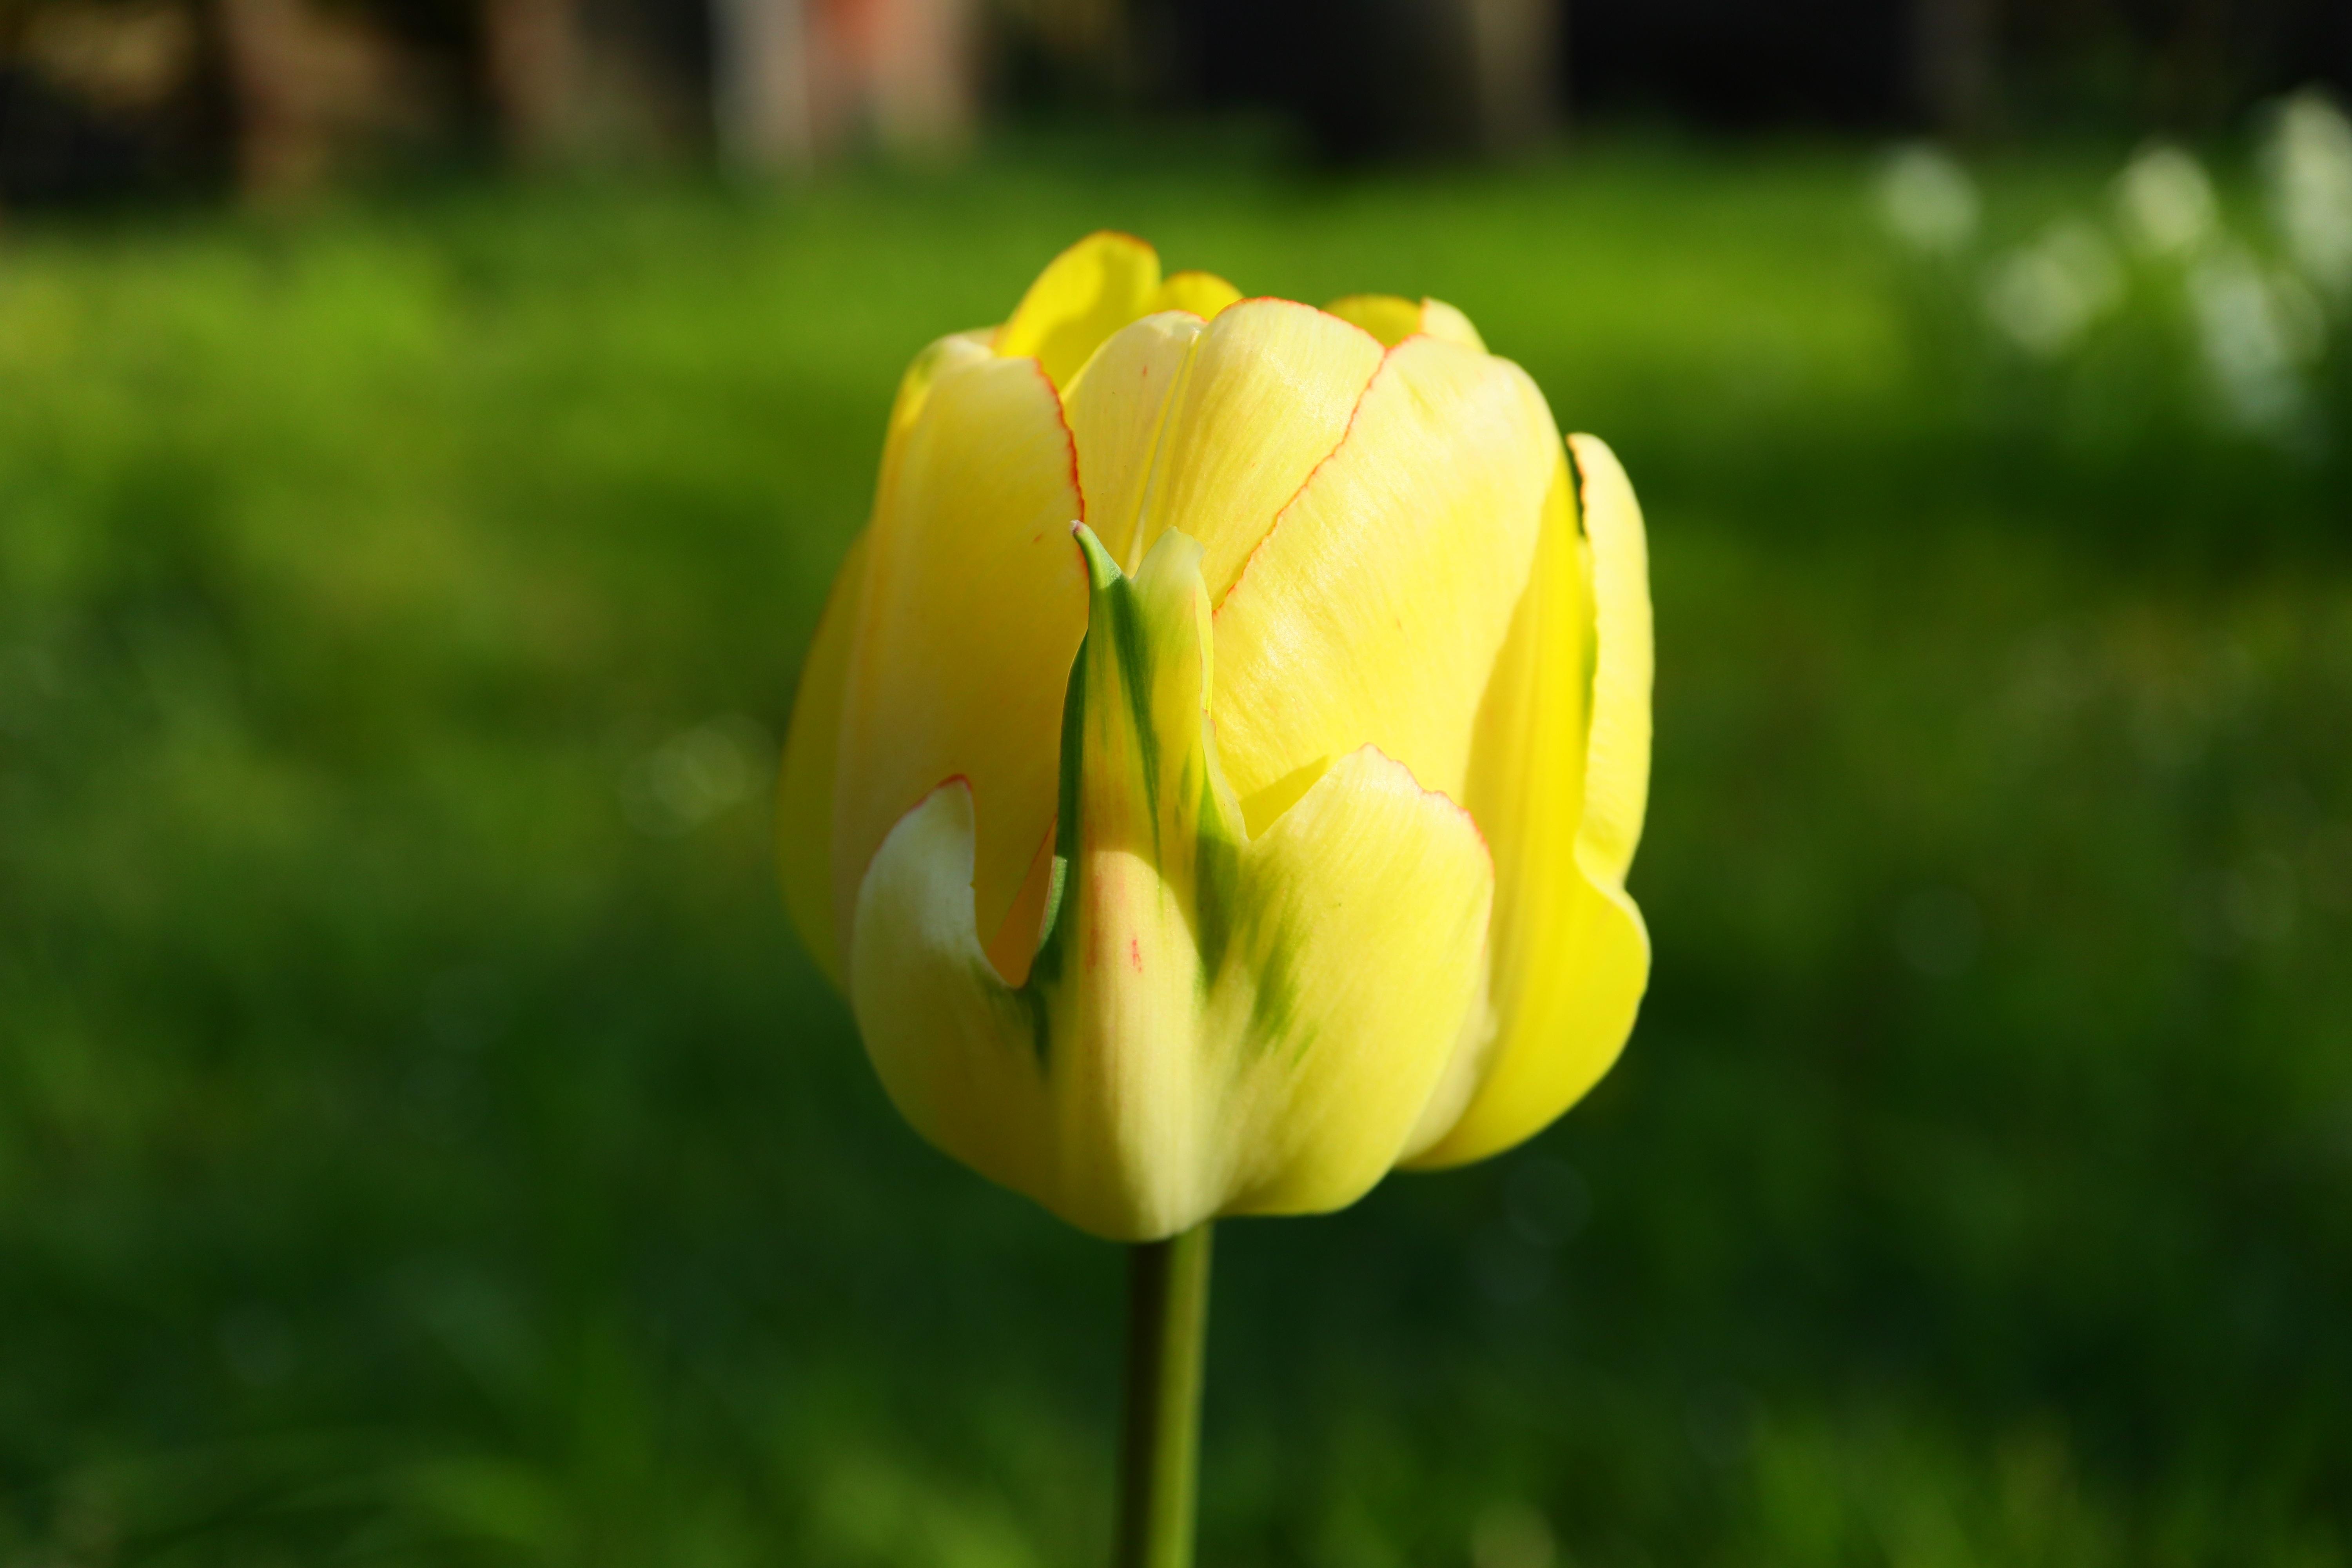 Tulip Double Late 'Akebono' - Tulip from Leo Berbee Bulb Company